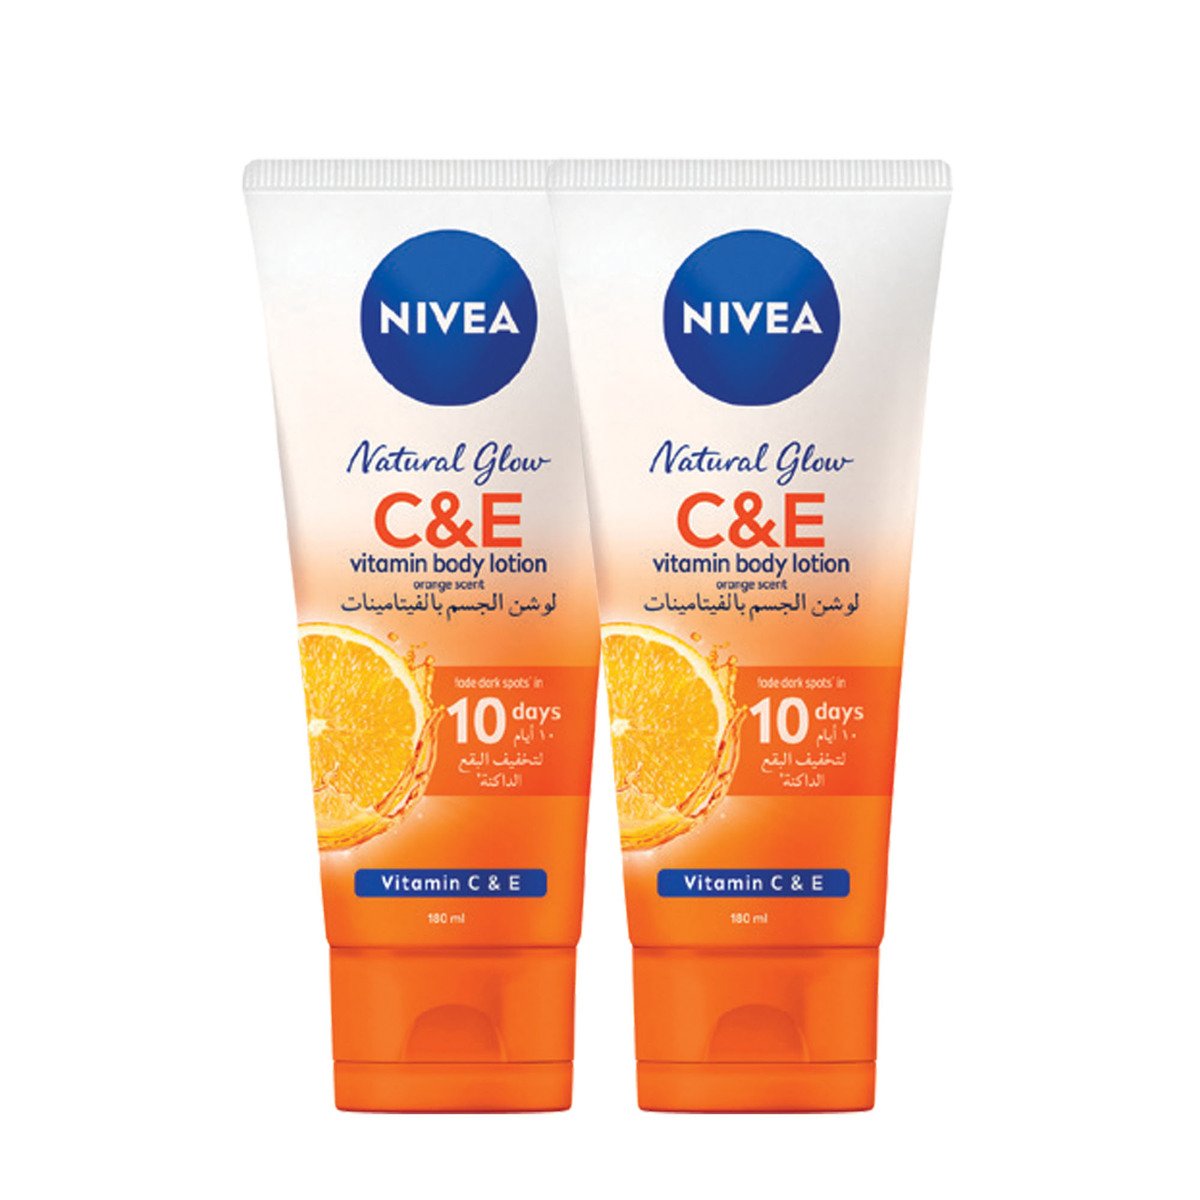 Nivea Natural Glow Vitamin C & E Orange Body Lotion Value Pack 2 x 180 ml